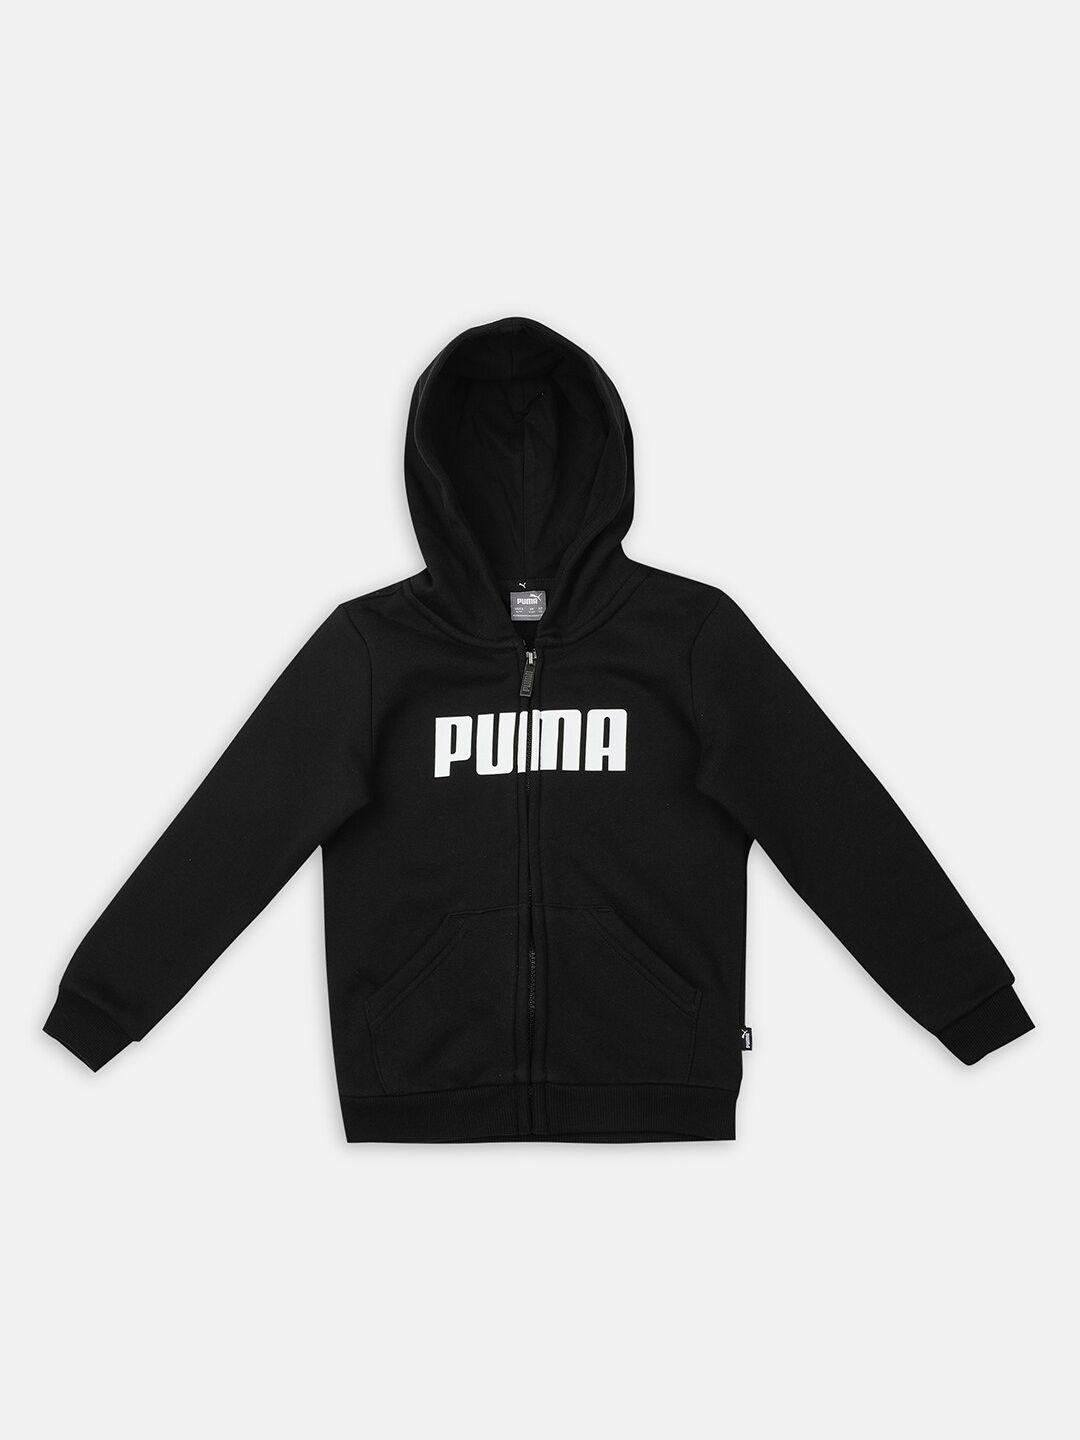 puma-boys-black-brand-logo-outdoor-open-front-jacket